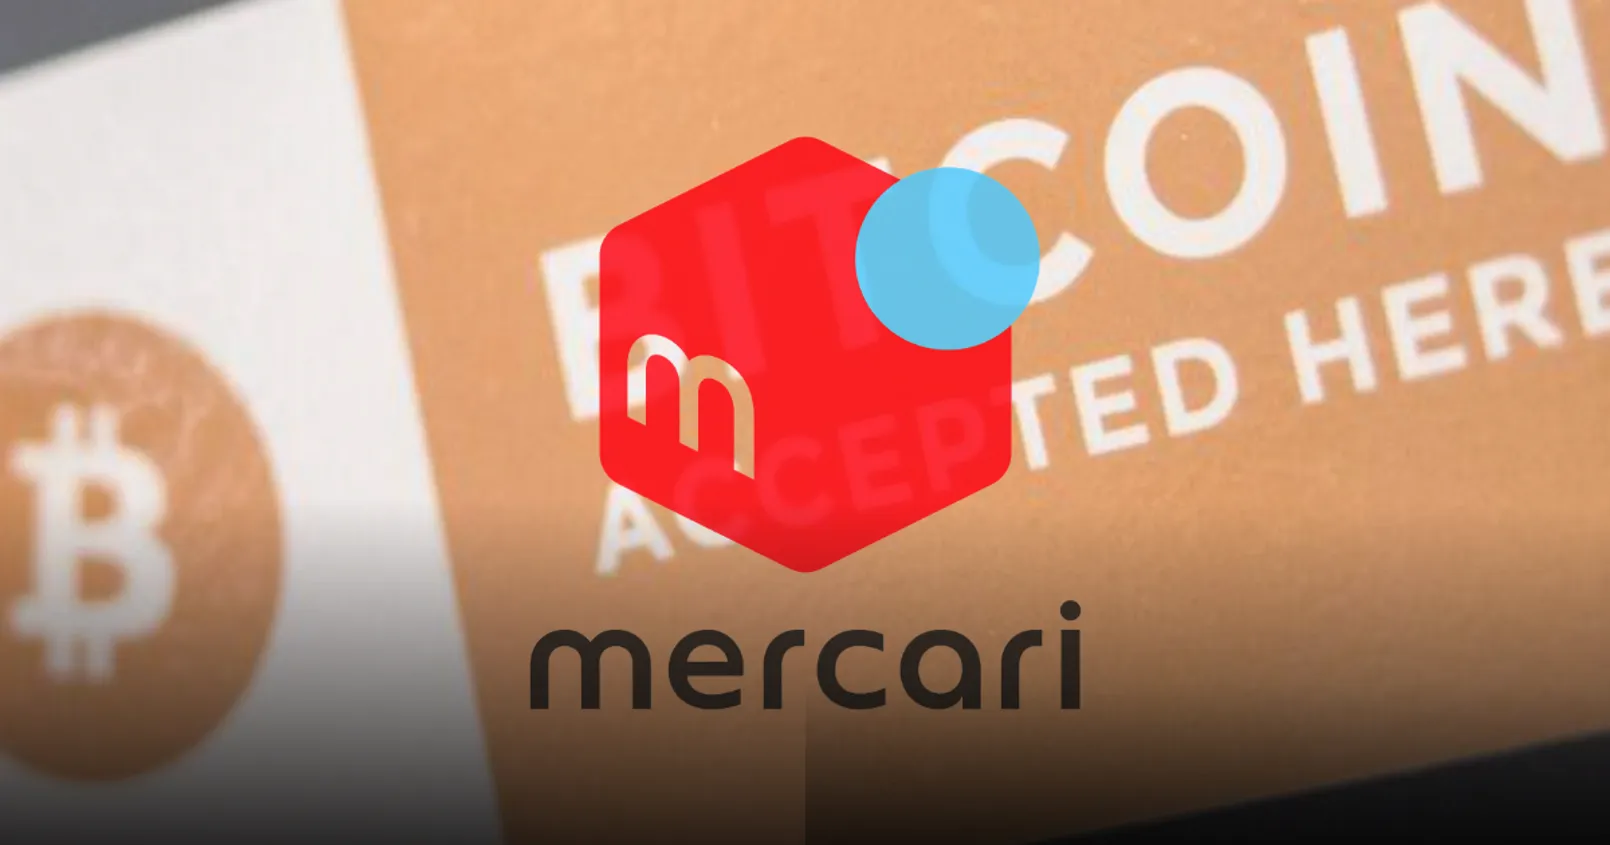 'Mercari' แพลตฟอร์ม E-commerce ยักษ์ใหญ่ในญี่ปุ่น เตรียมเปิดรับ Bitcoin ในการชำระเงินซื้อสินค้า